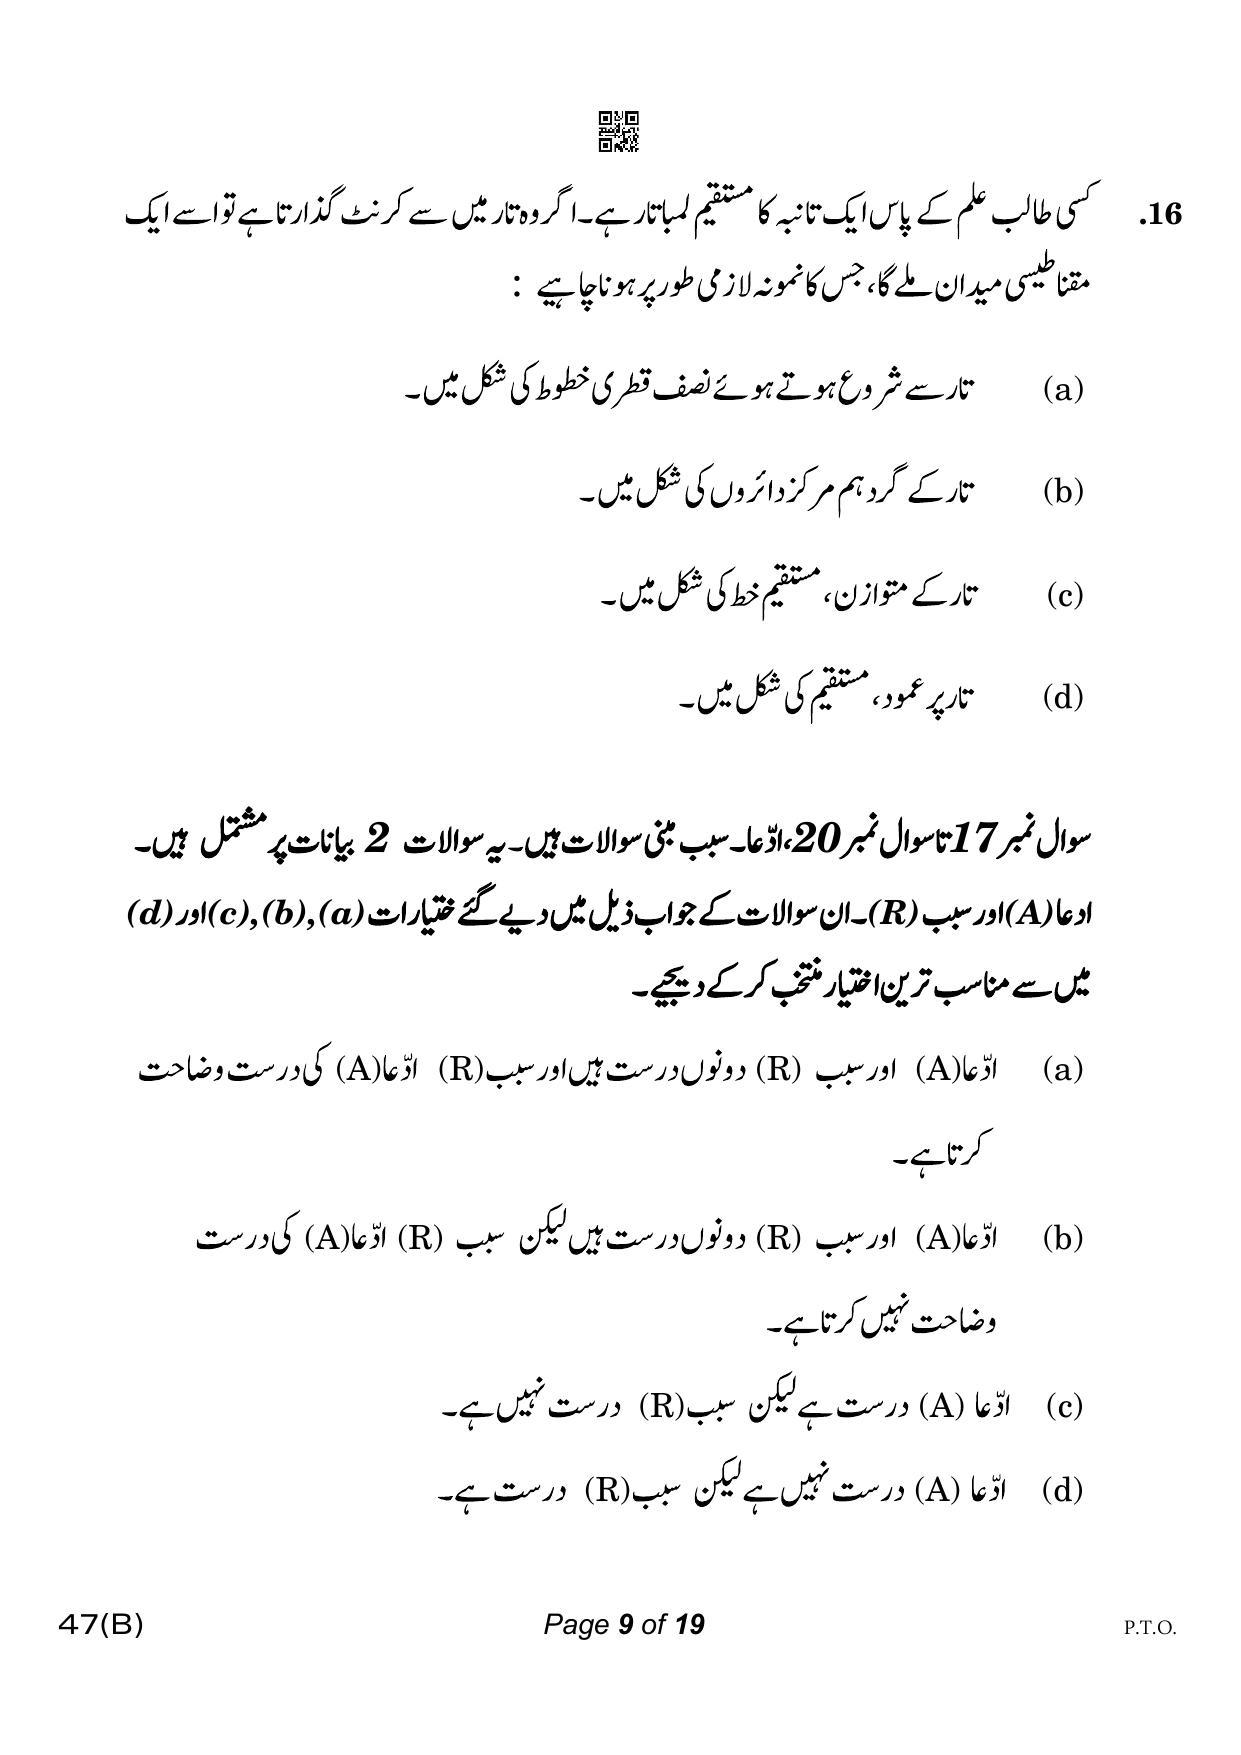 CBSE Class 10 47-B-5 Science for VI Urdu Version 2023 Question Paper - Page 9